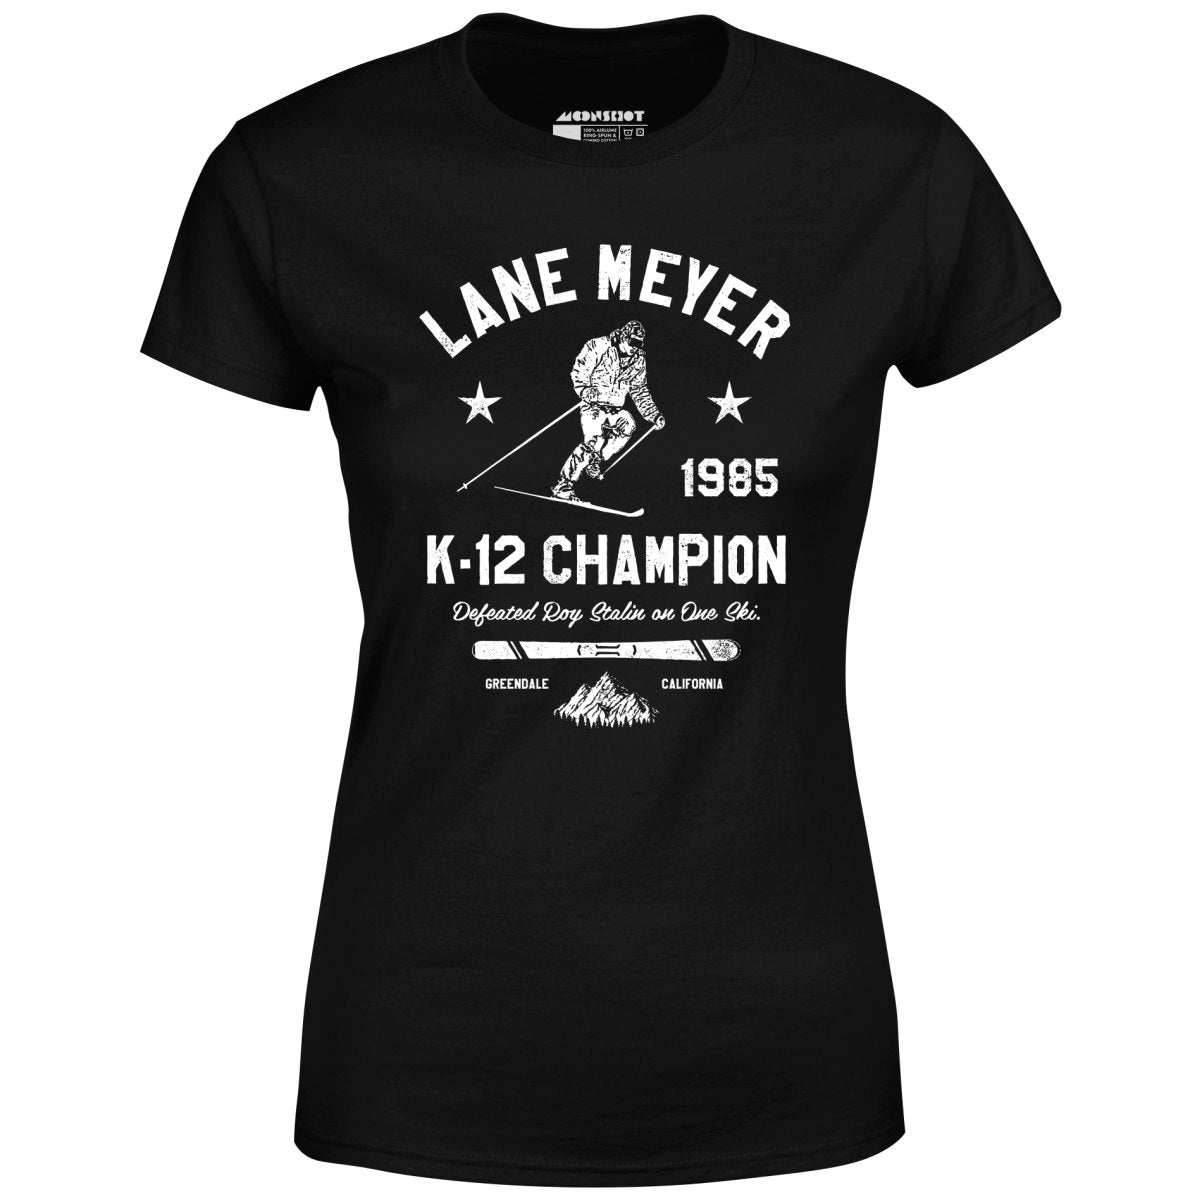 Lane Meyer K-12 Champion - Women's T-Shirt